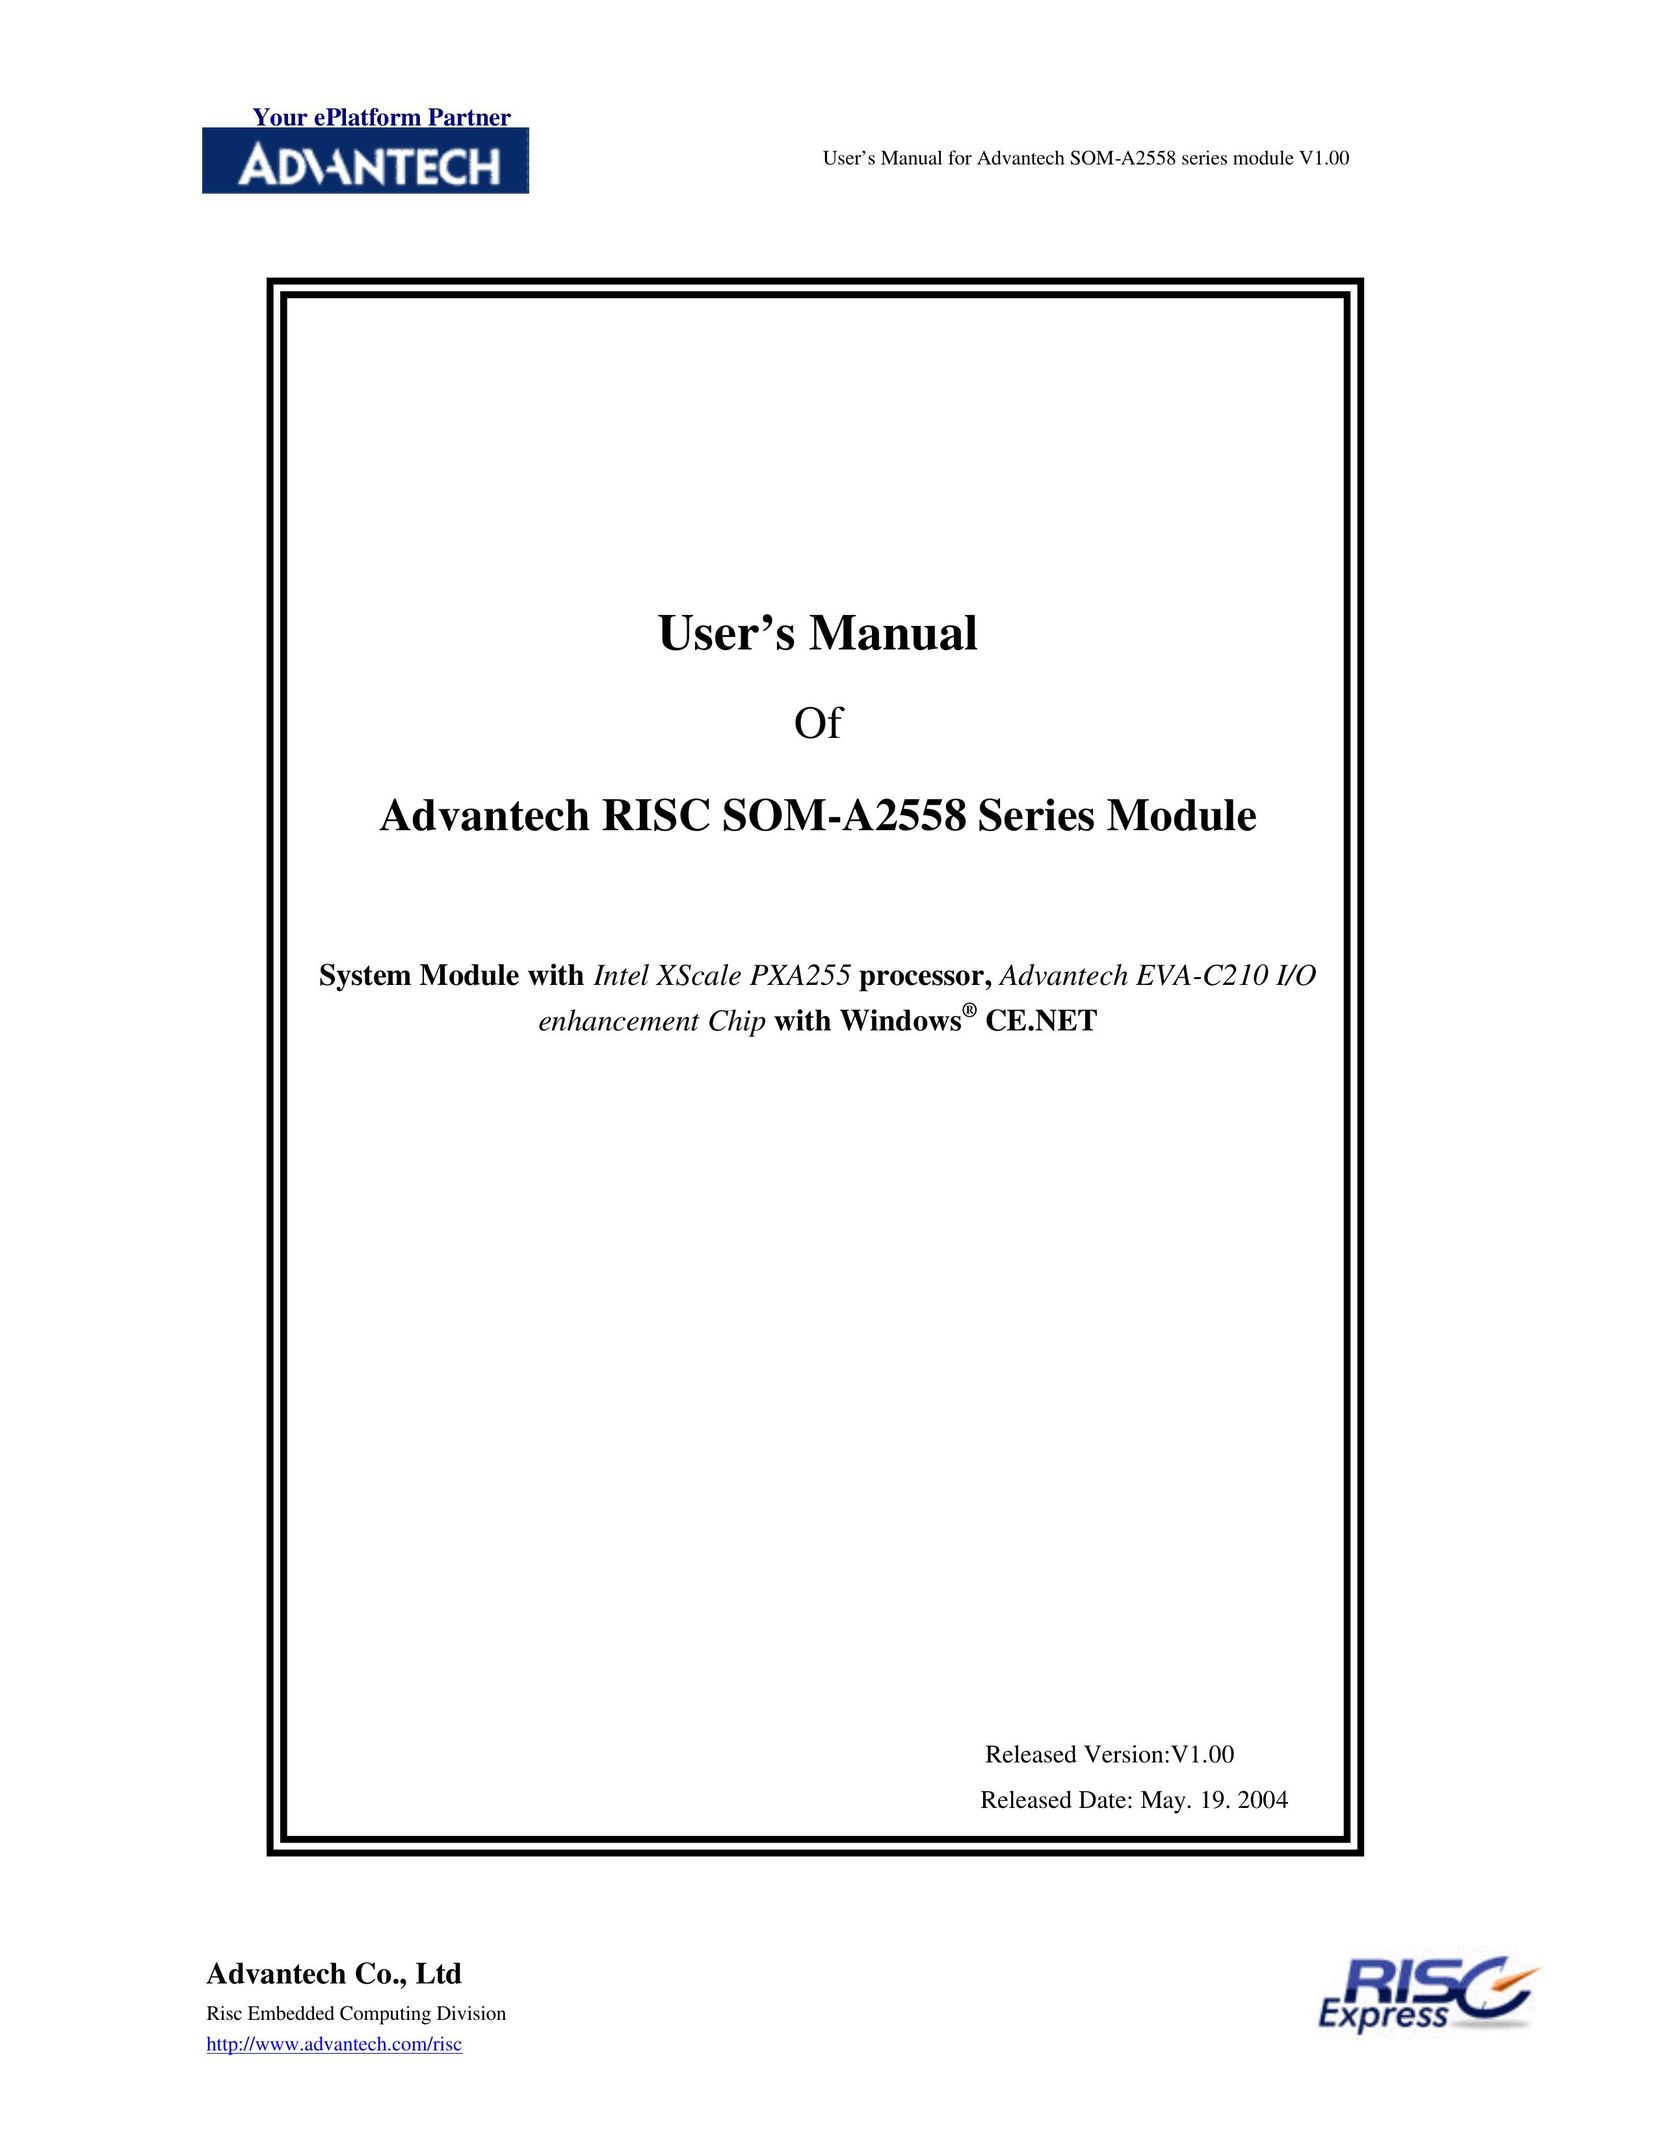 Advantech SOM-A2558 Personal Computer User Manual